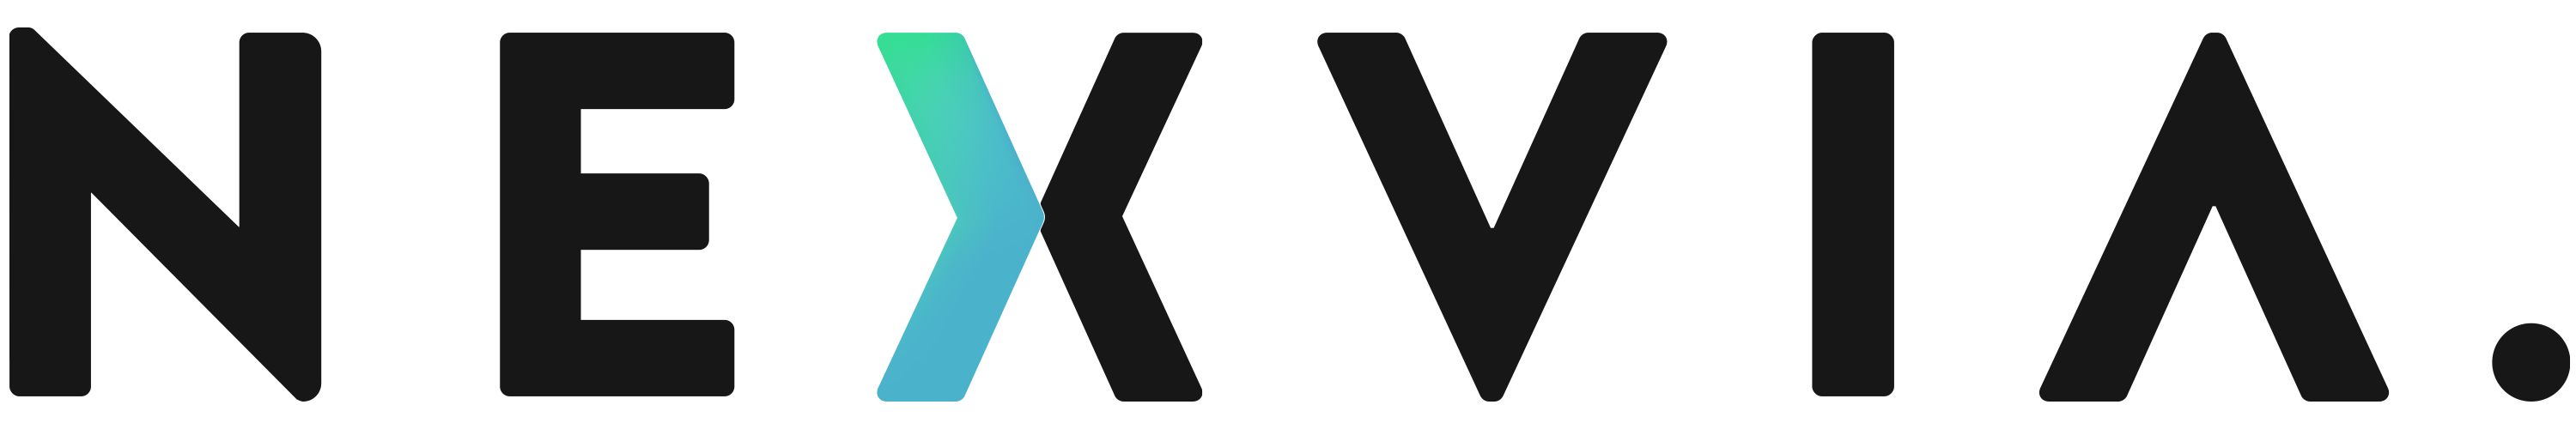 Nexvia Logo Transperent Dark